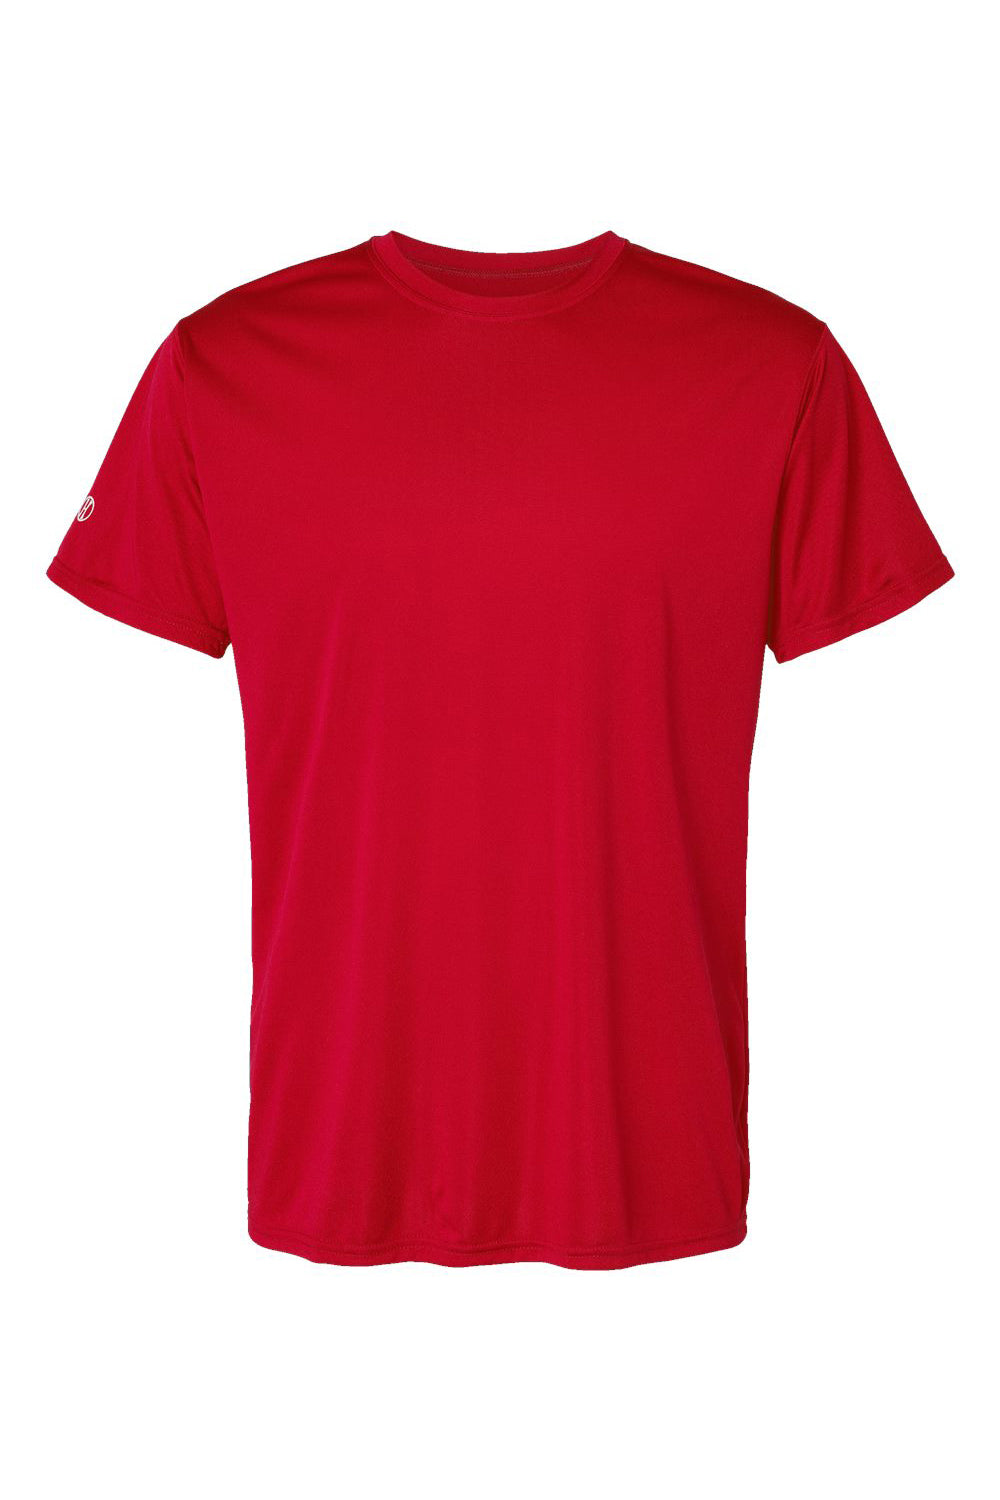 Holloway 222818 Mens Momentum Short Sleeve Crewneck T-Shirt Scarlet Red Flat Front